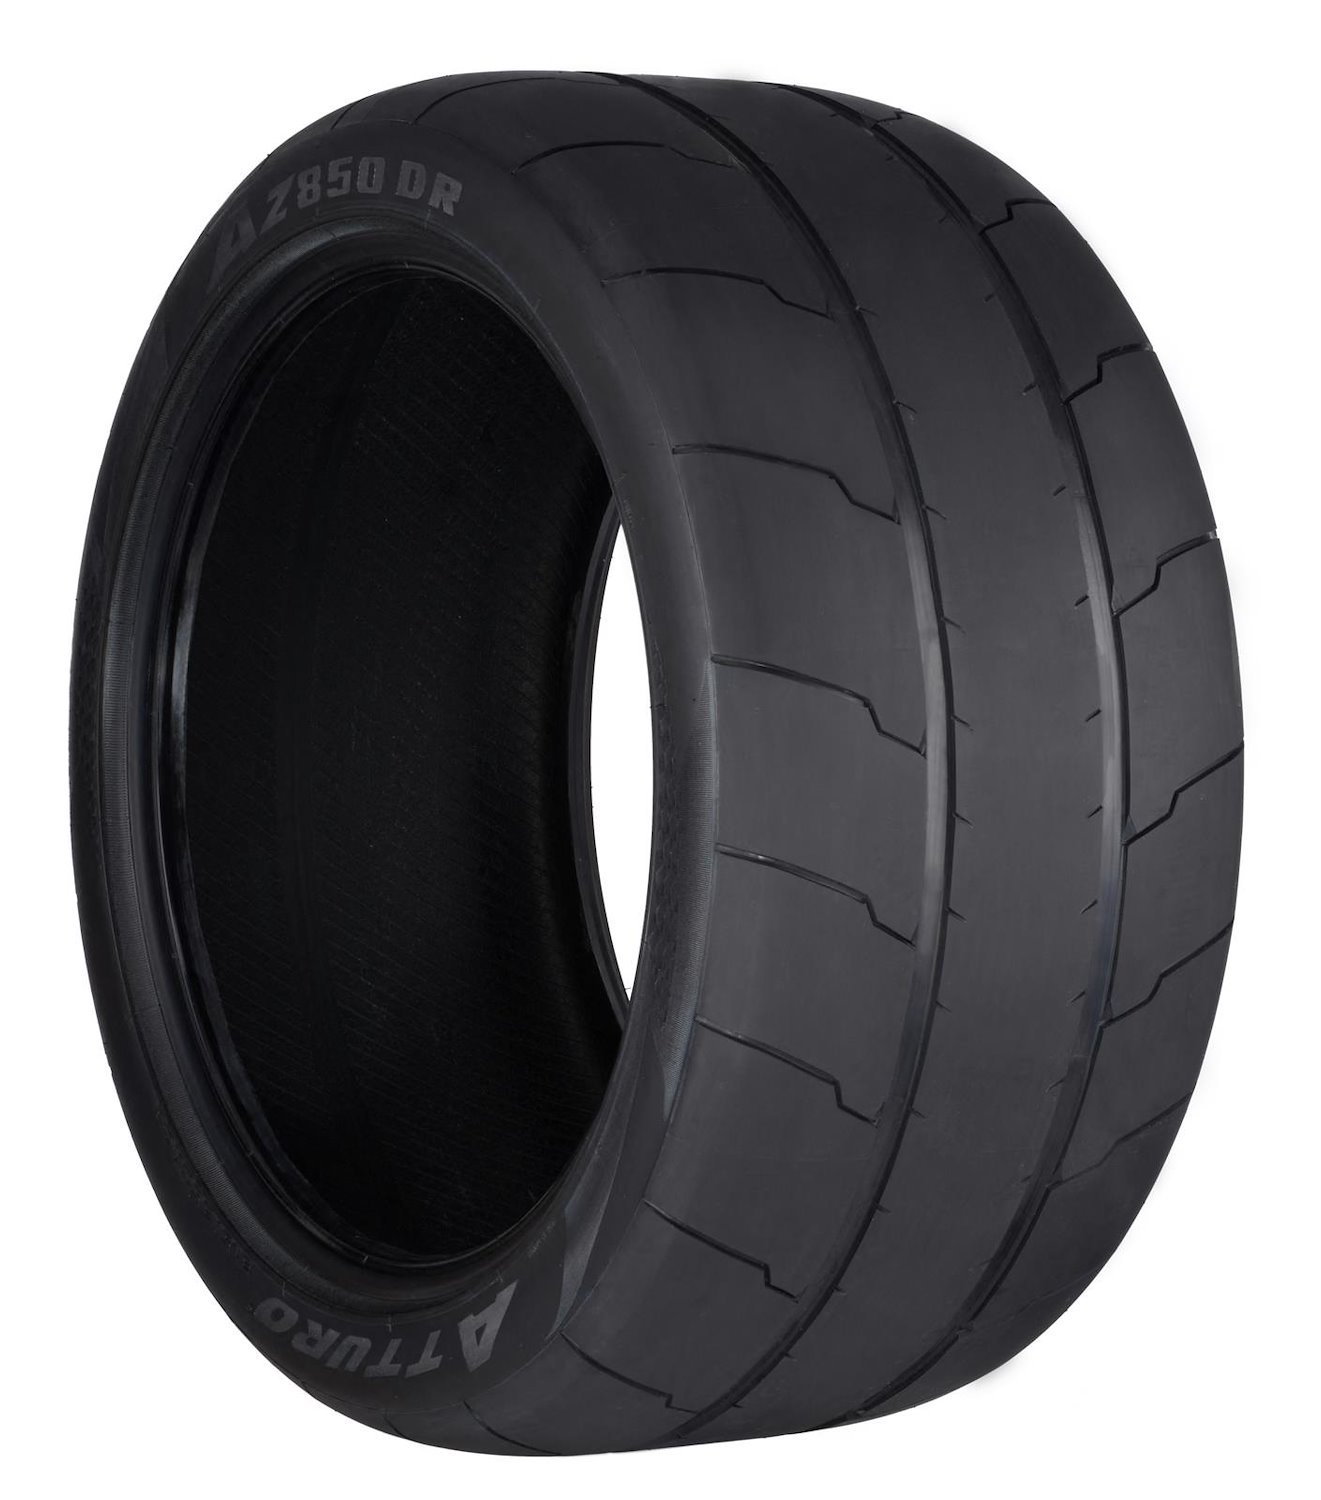 AZ 850 DR Drag Radial Tire, 305/35R20